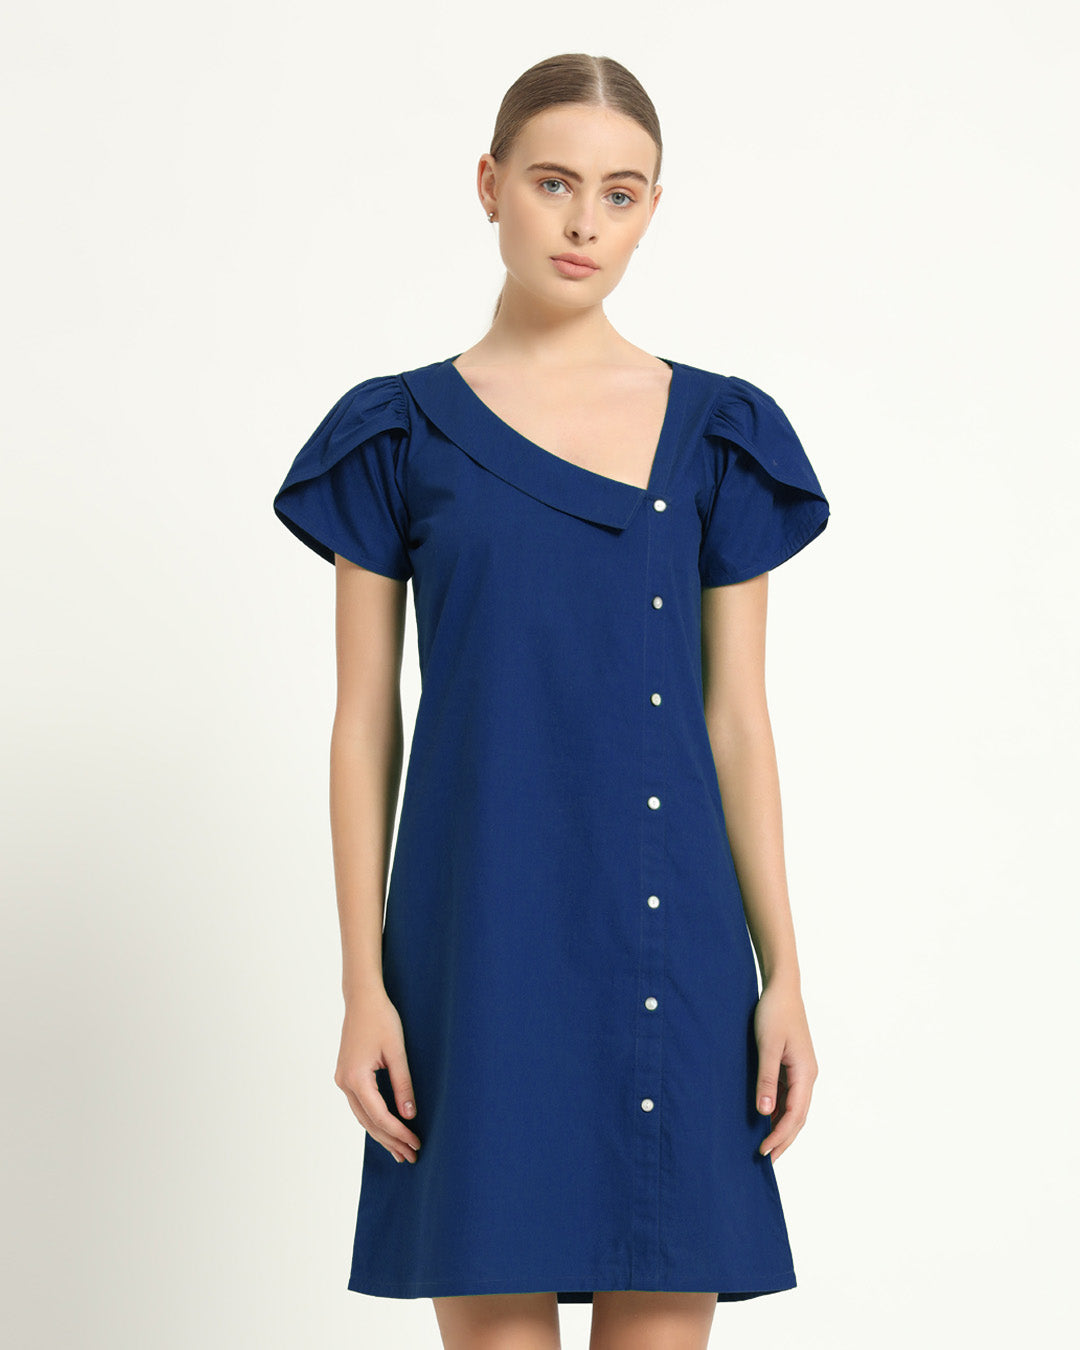 The Krensdorf Cobalt Cotton Dress